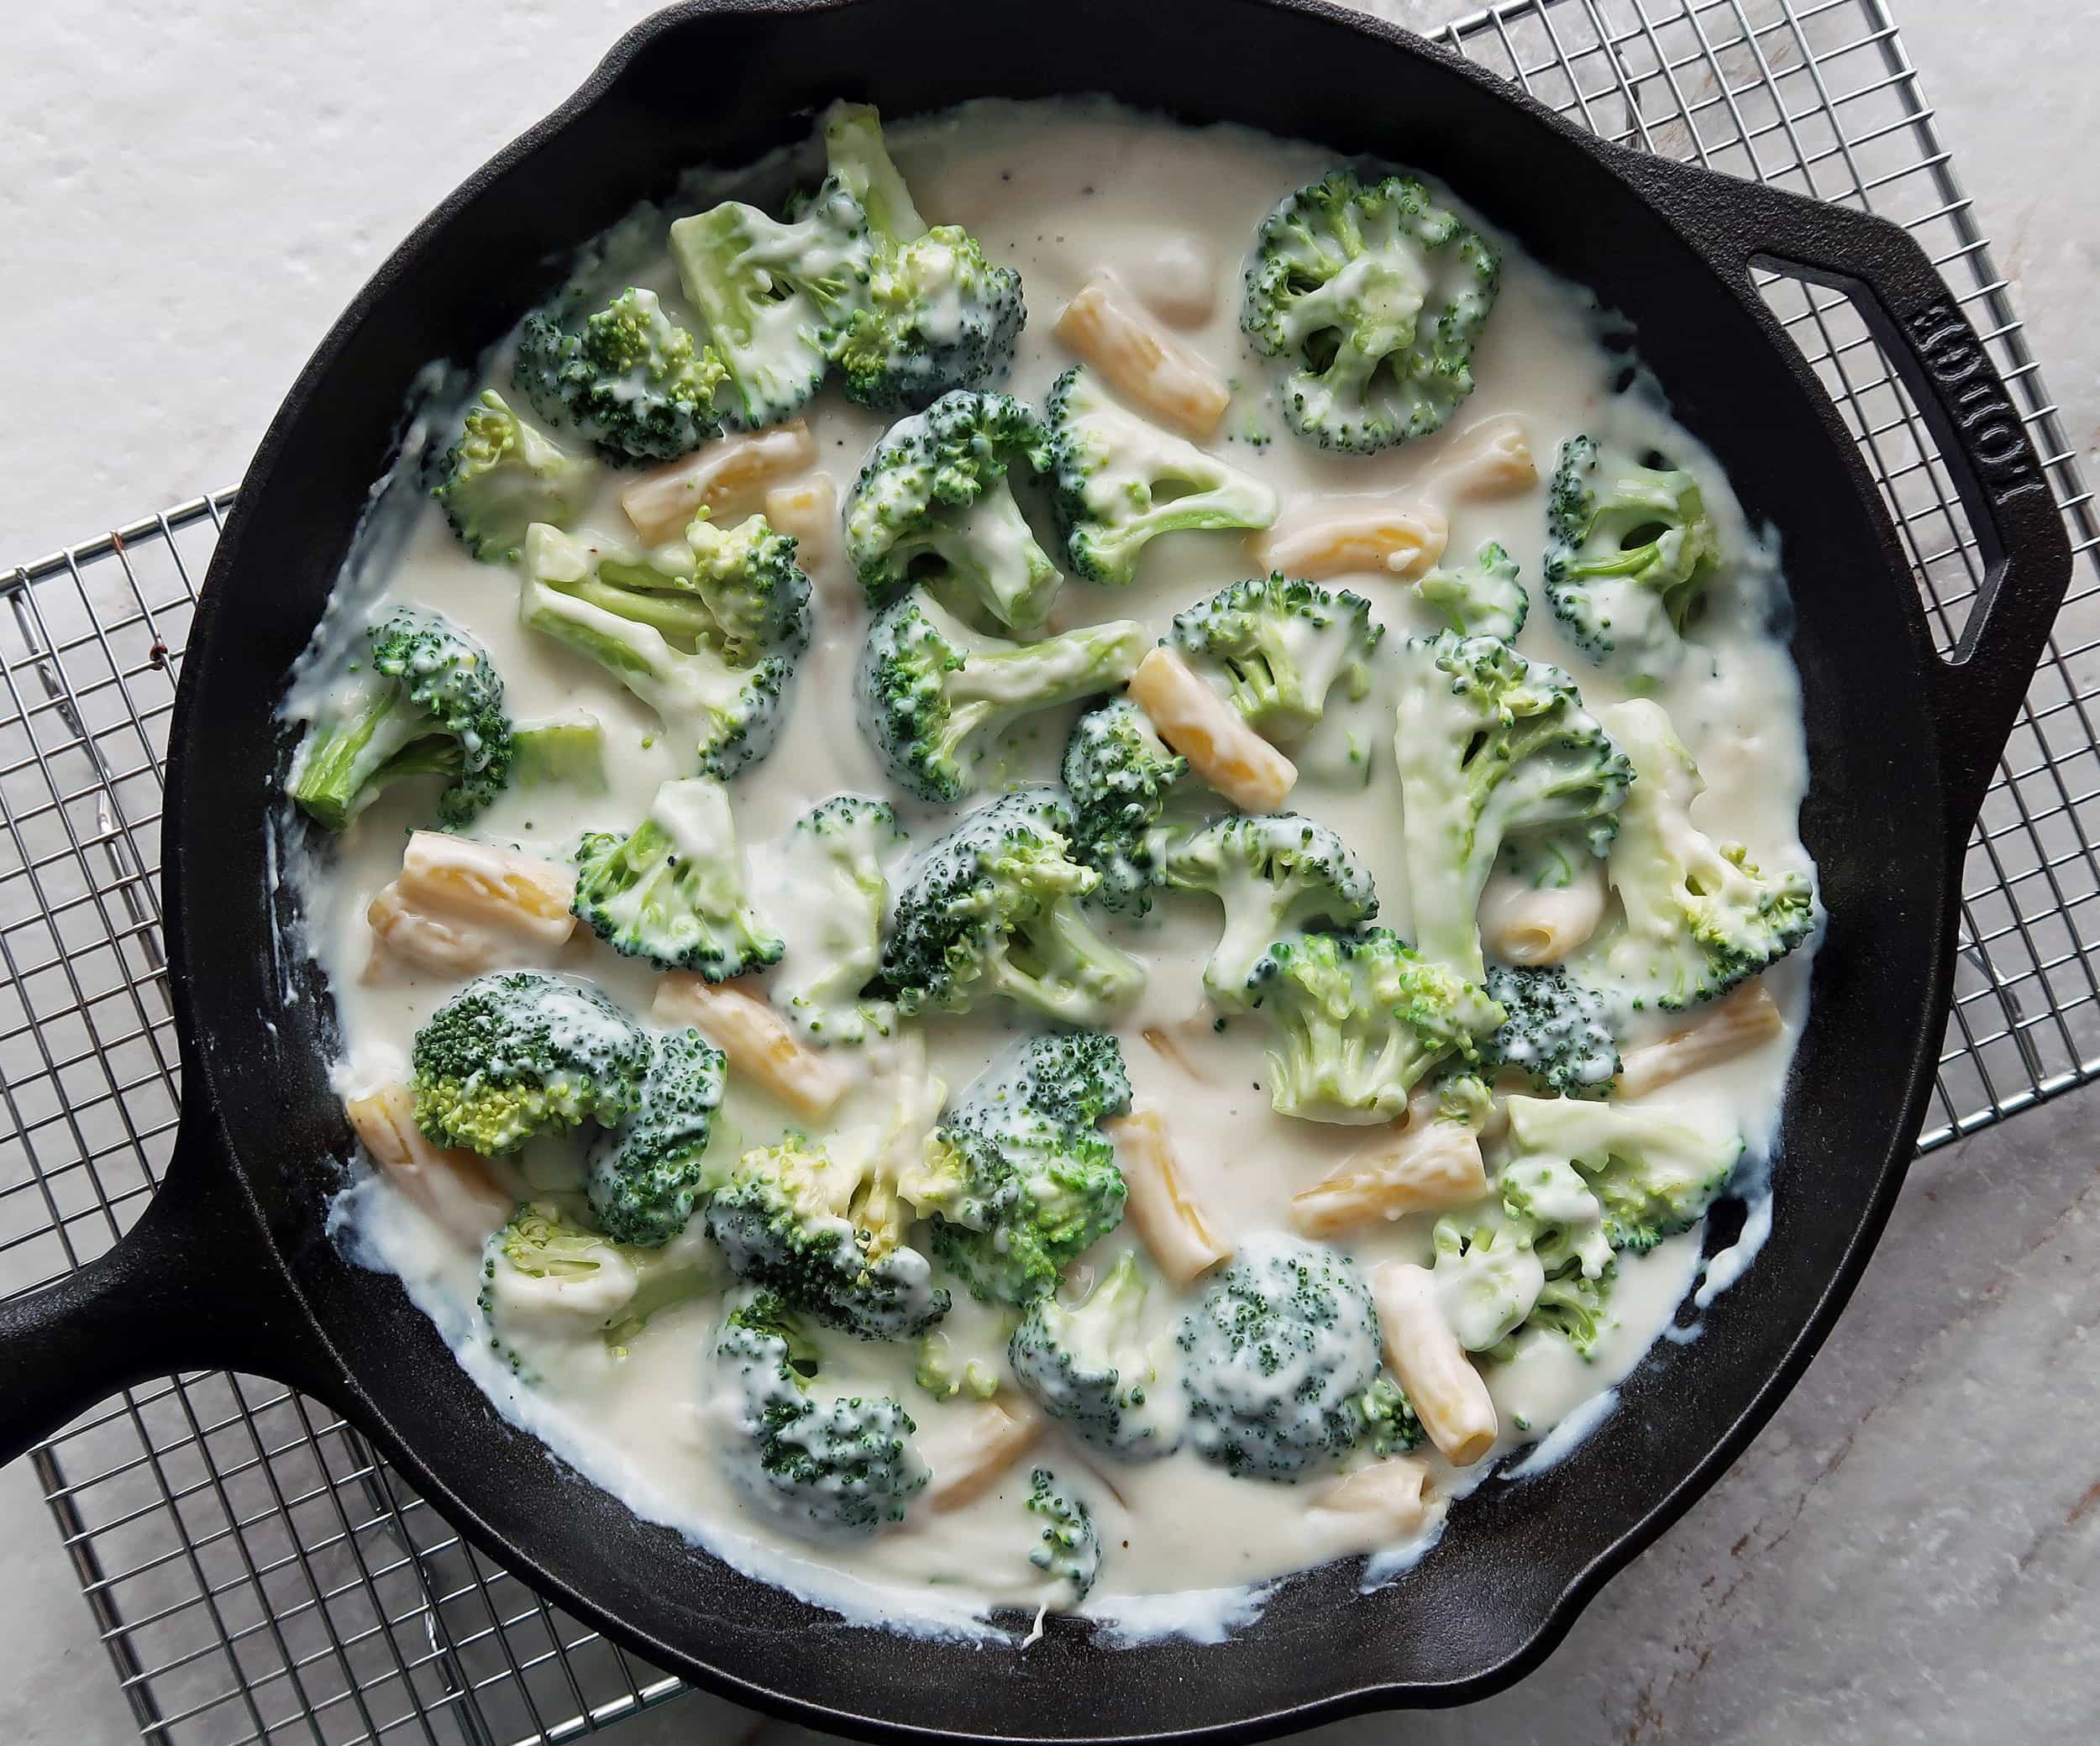 Broccoli, pasta, and milk in a skillet.